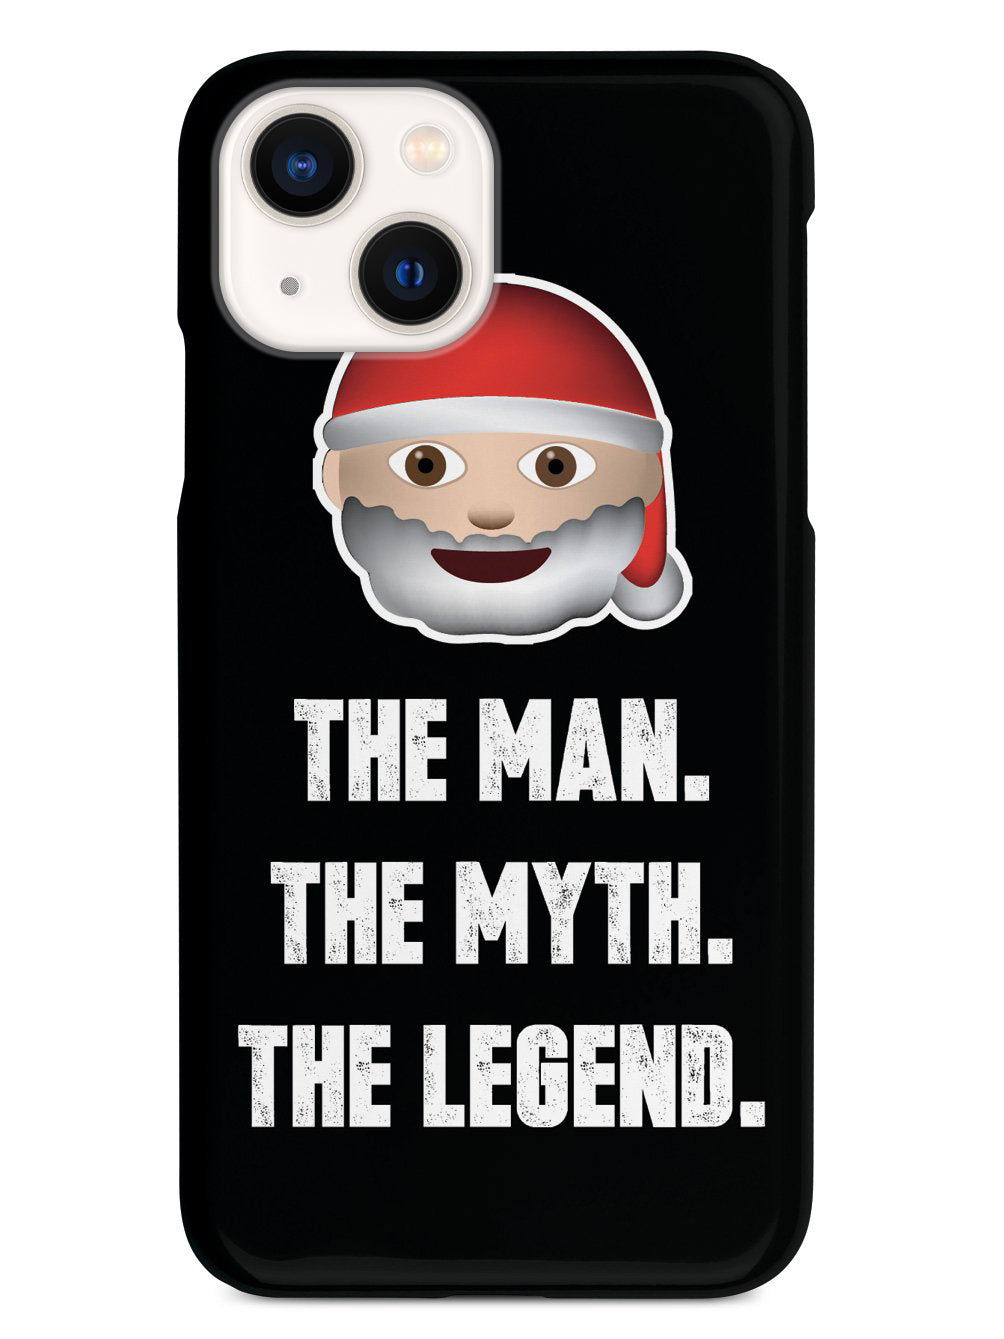 Santa - The Man, The Myth, The Legend Case